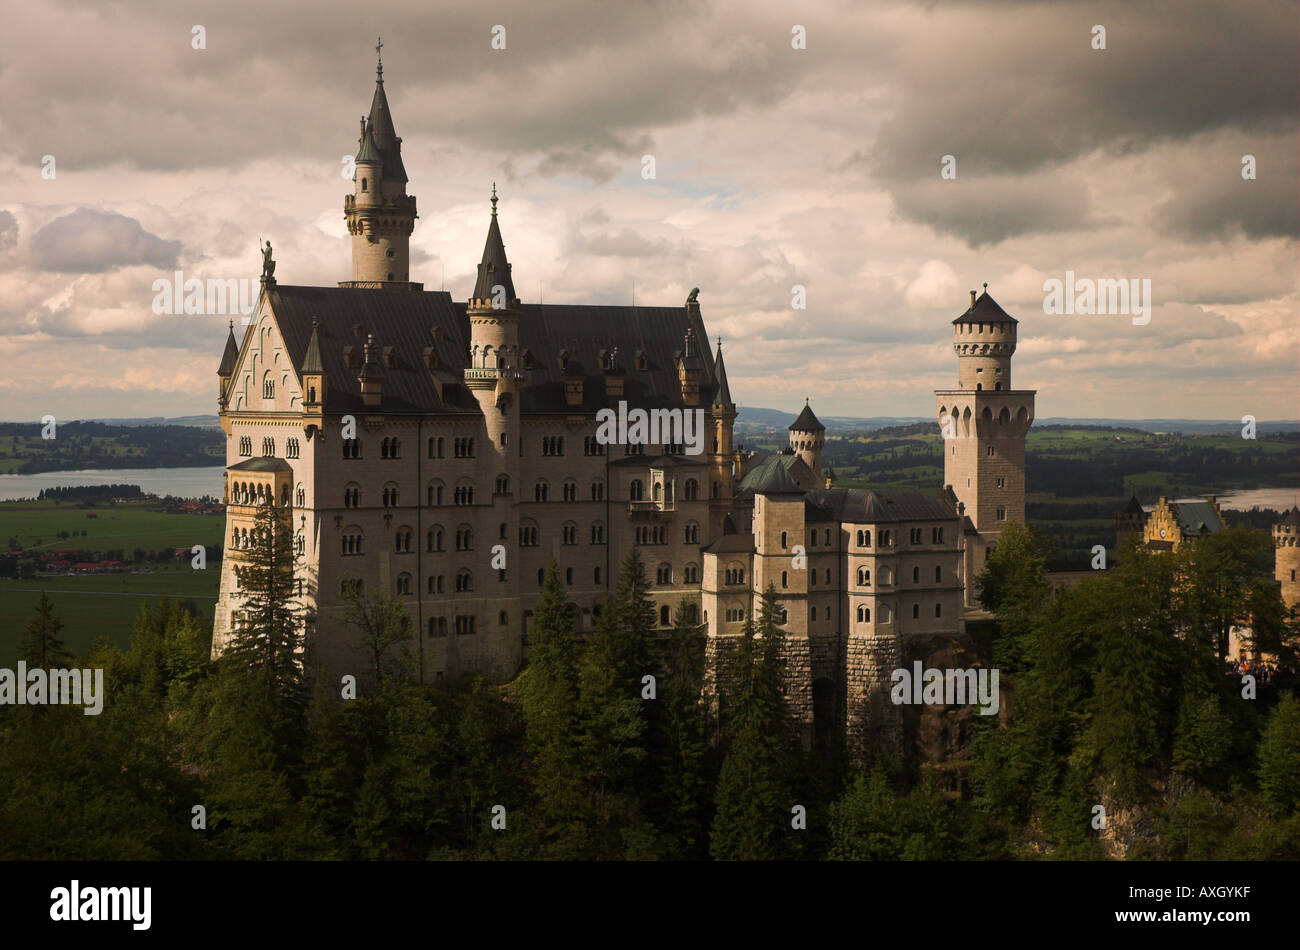 Mad King Ludwig II's (Swan King) Neuschwanstein castle, Nr. Fussen, Bavaria Germany Stock Photo